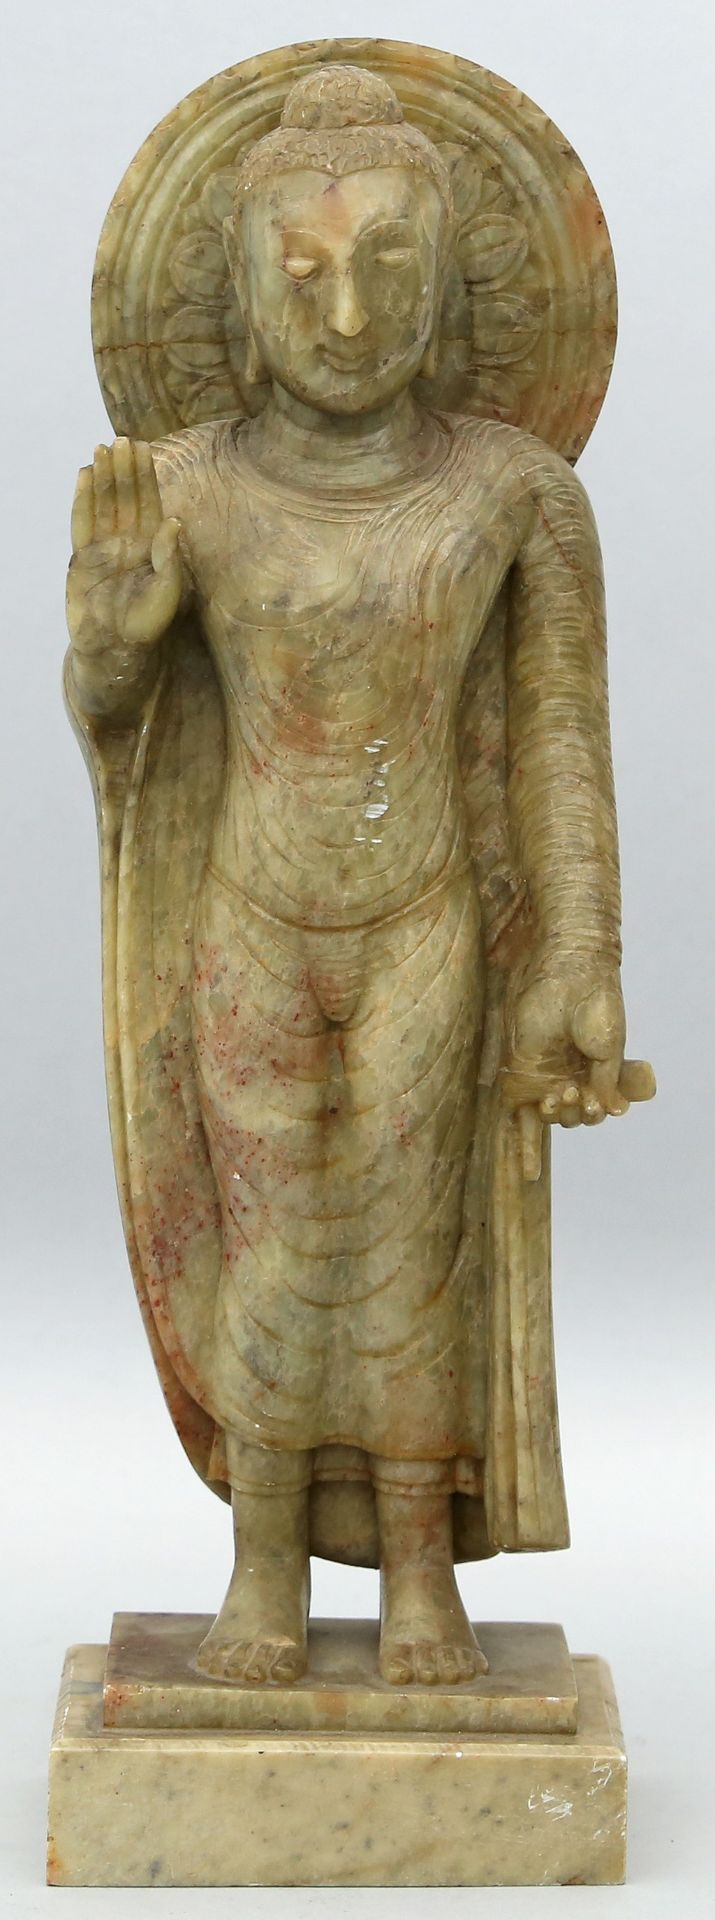 Skulptur stehender Buddha.